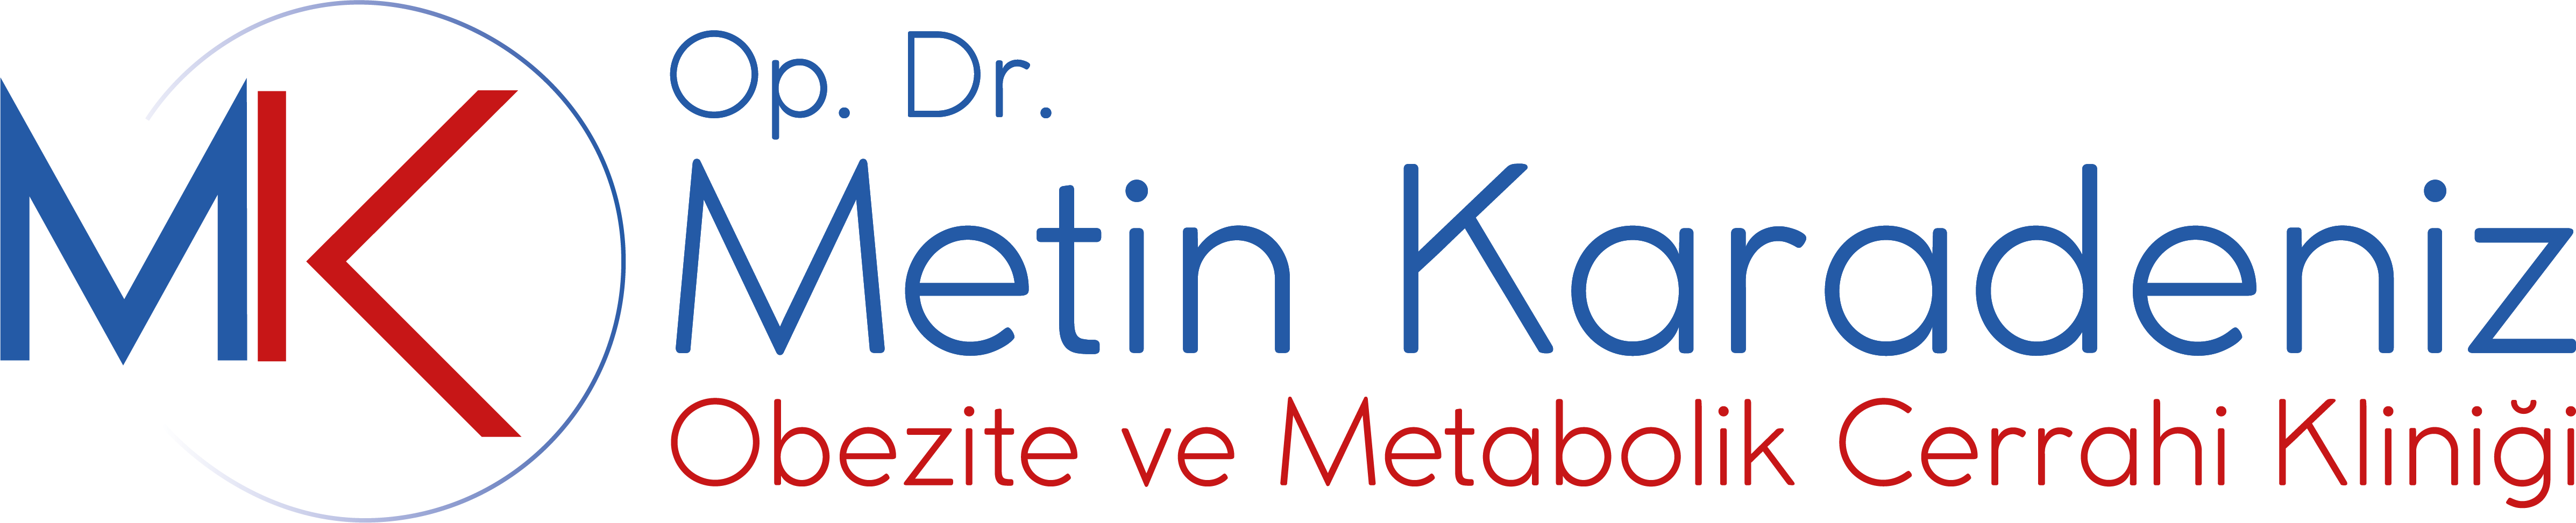 Dr. Metin Karadeniz Obesity And Metabolic Surgery Center - Logo